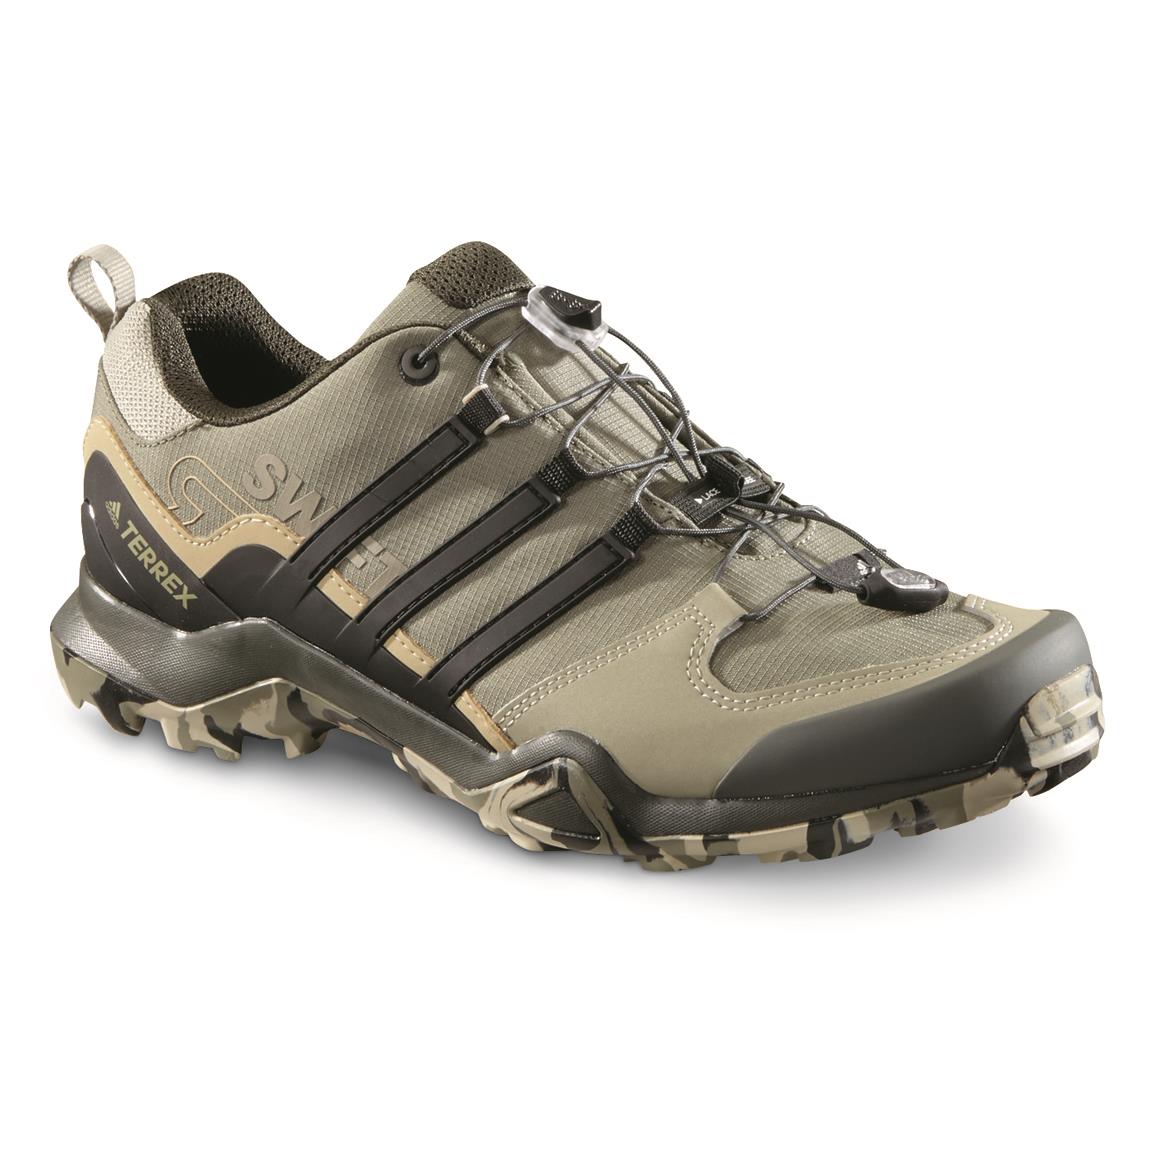 Adidas Men's Terrex Swift R2 Hiking Shoes, Legend Earth/black/feather Grey